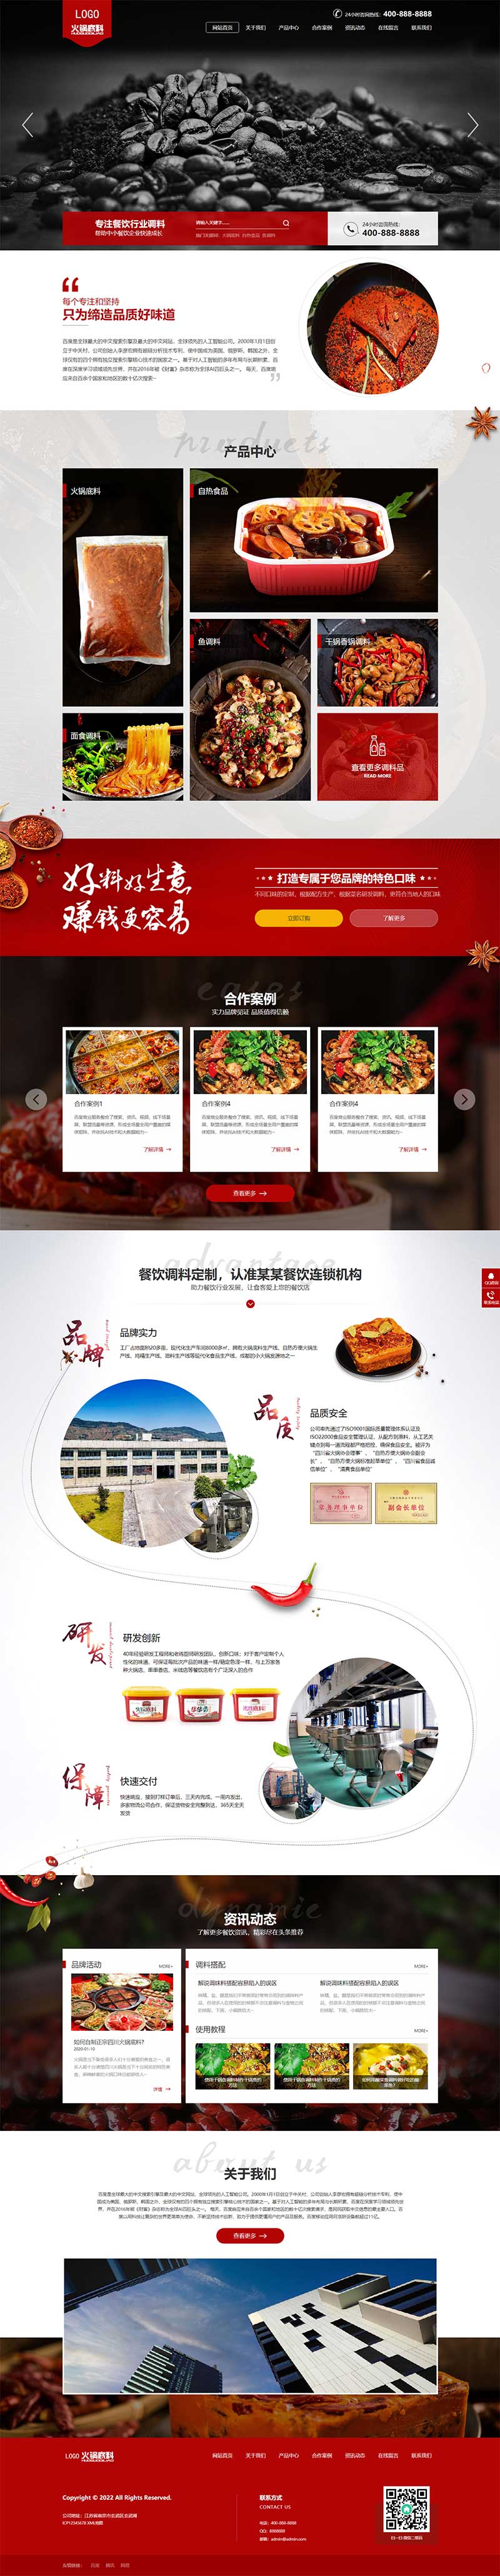 (PC+WAP)营销型餐饮美食网站源码 pbootcms高端火锅底料食品调料网站模板-1